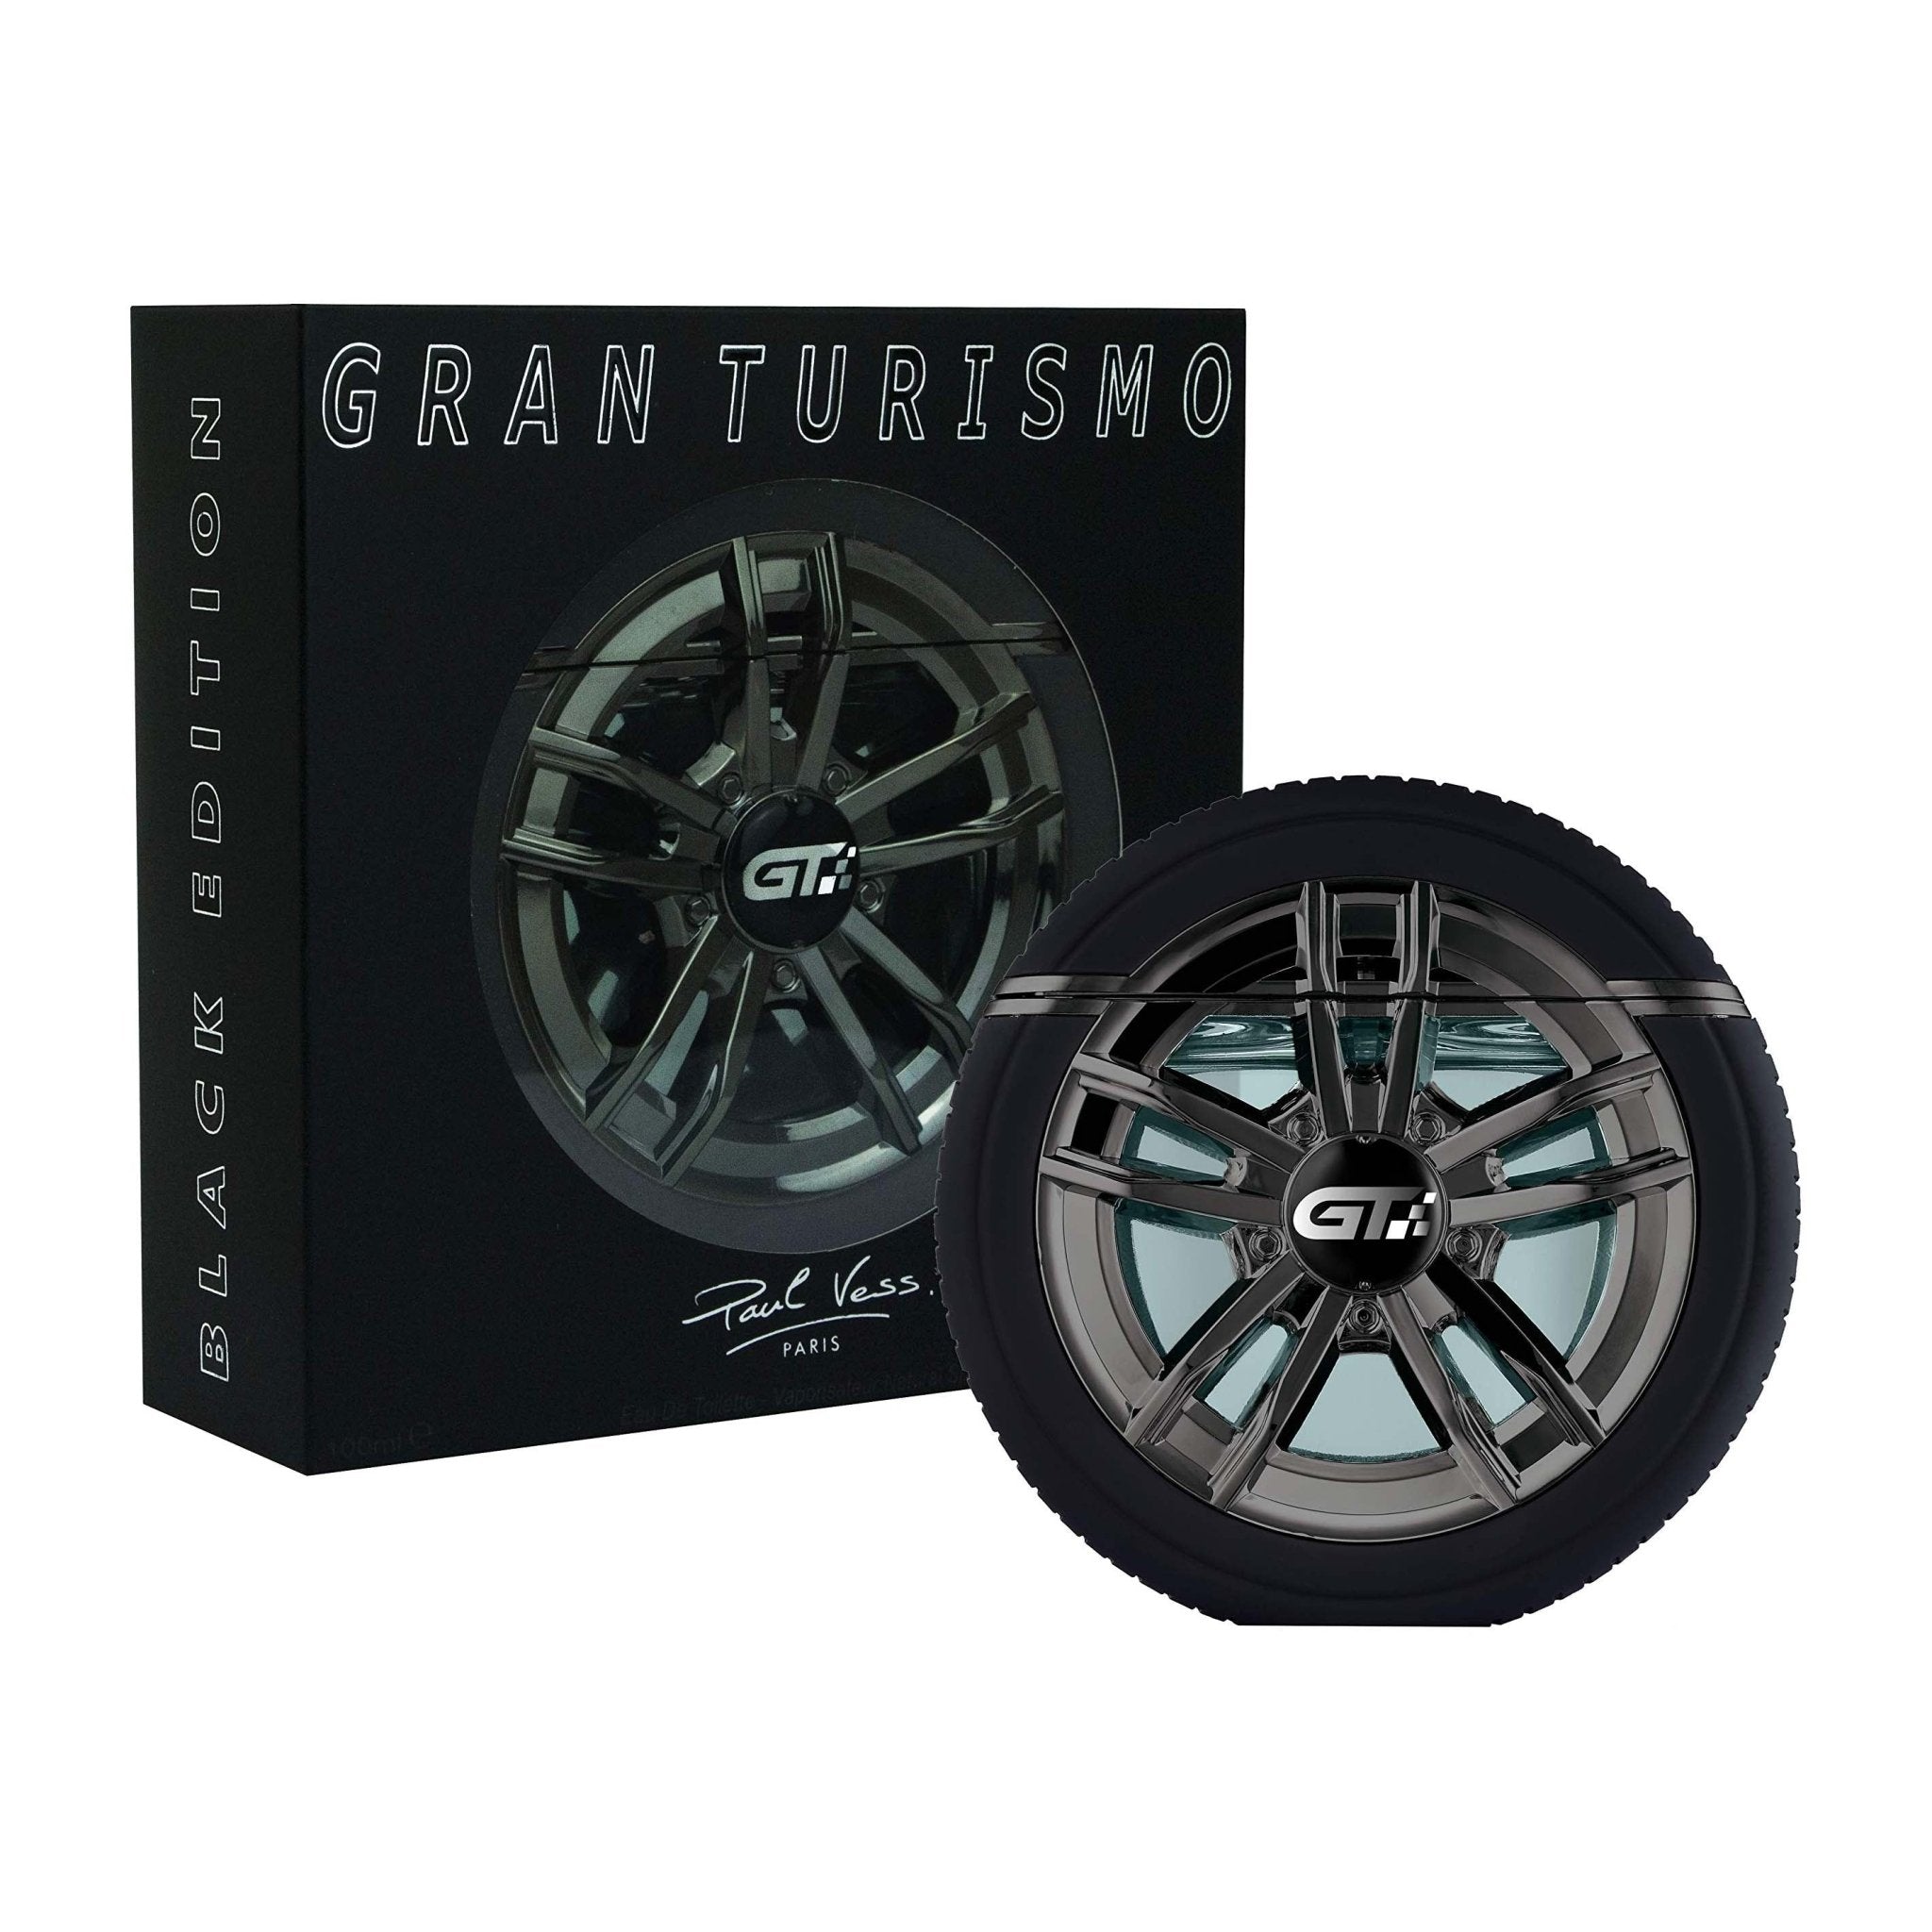 Paul Vess Gran Turismo Black Edition EDT For Men - 100ml - Bloom Pharmacy